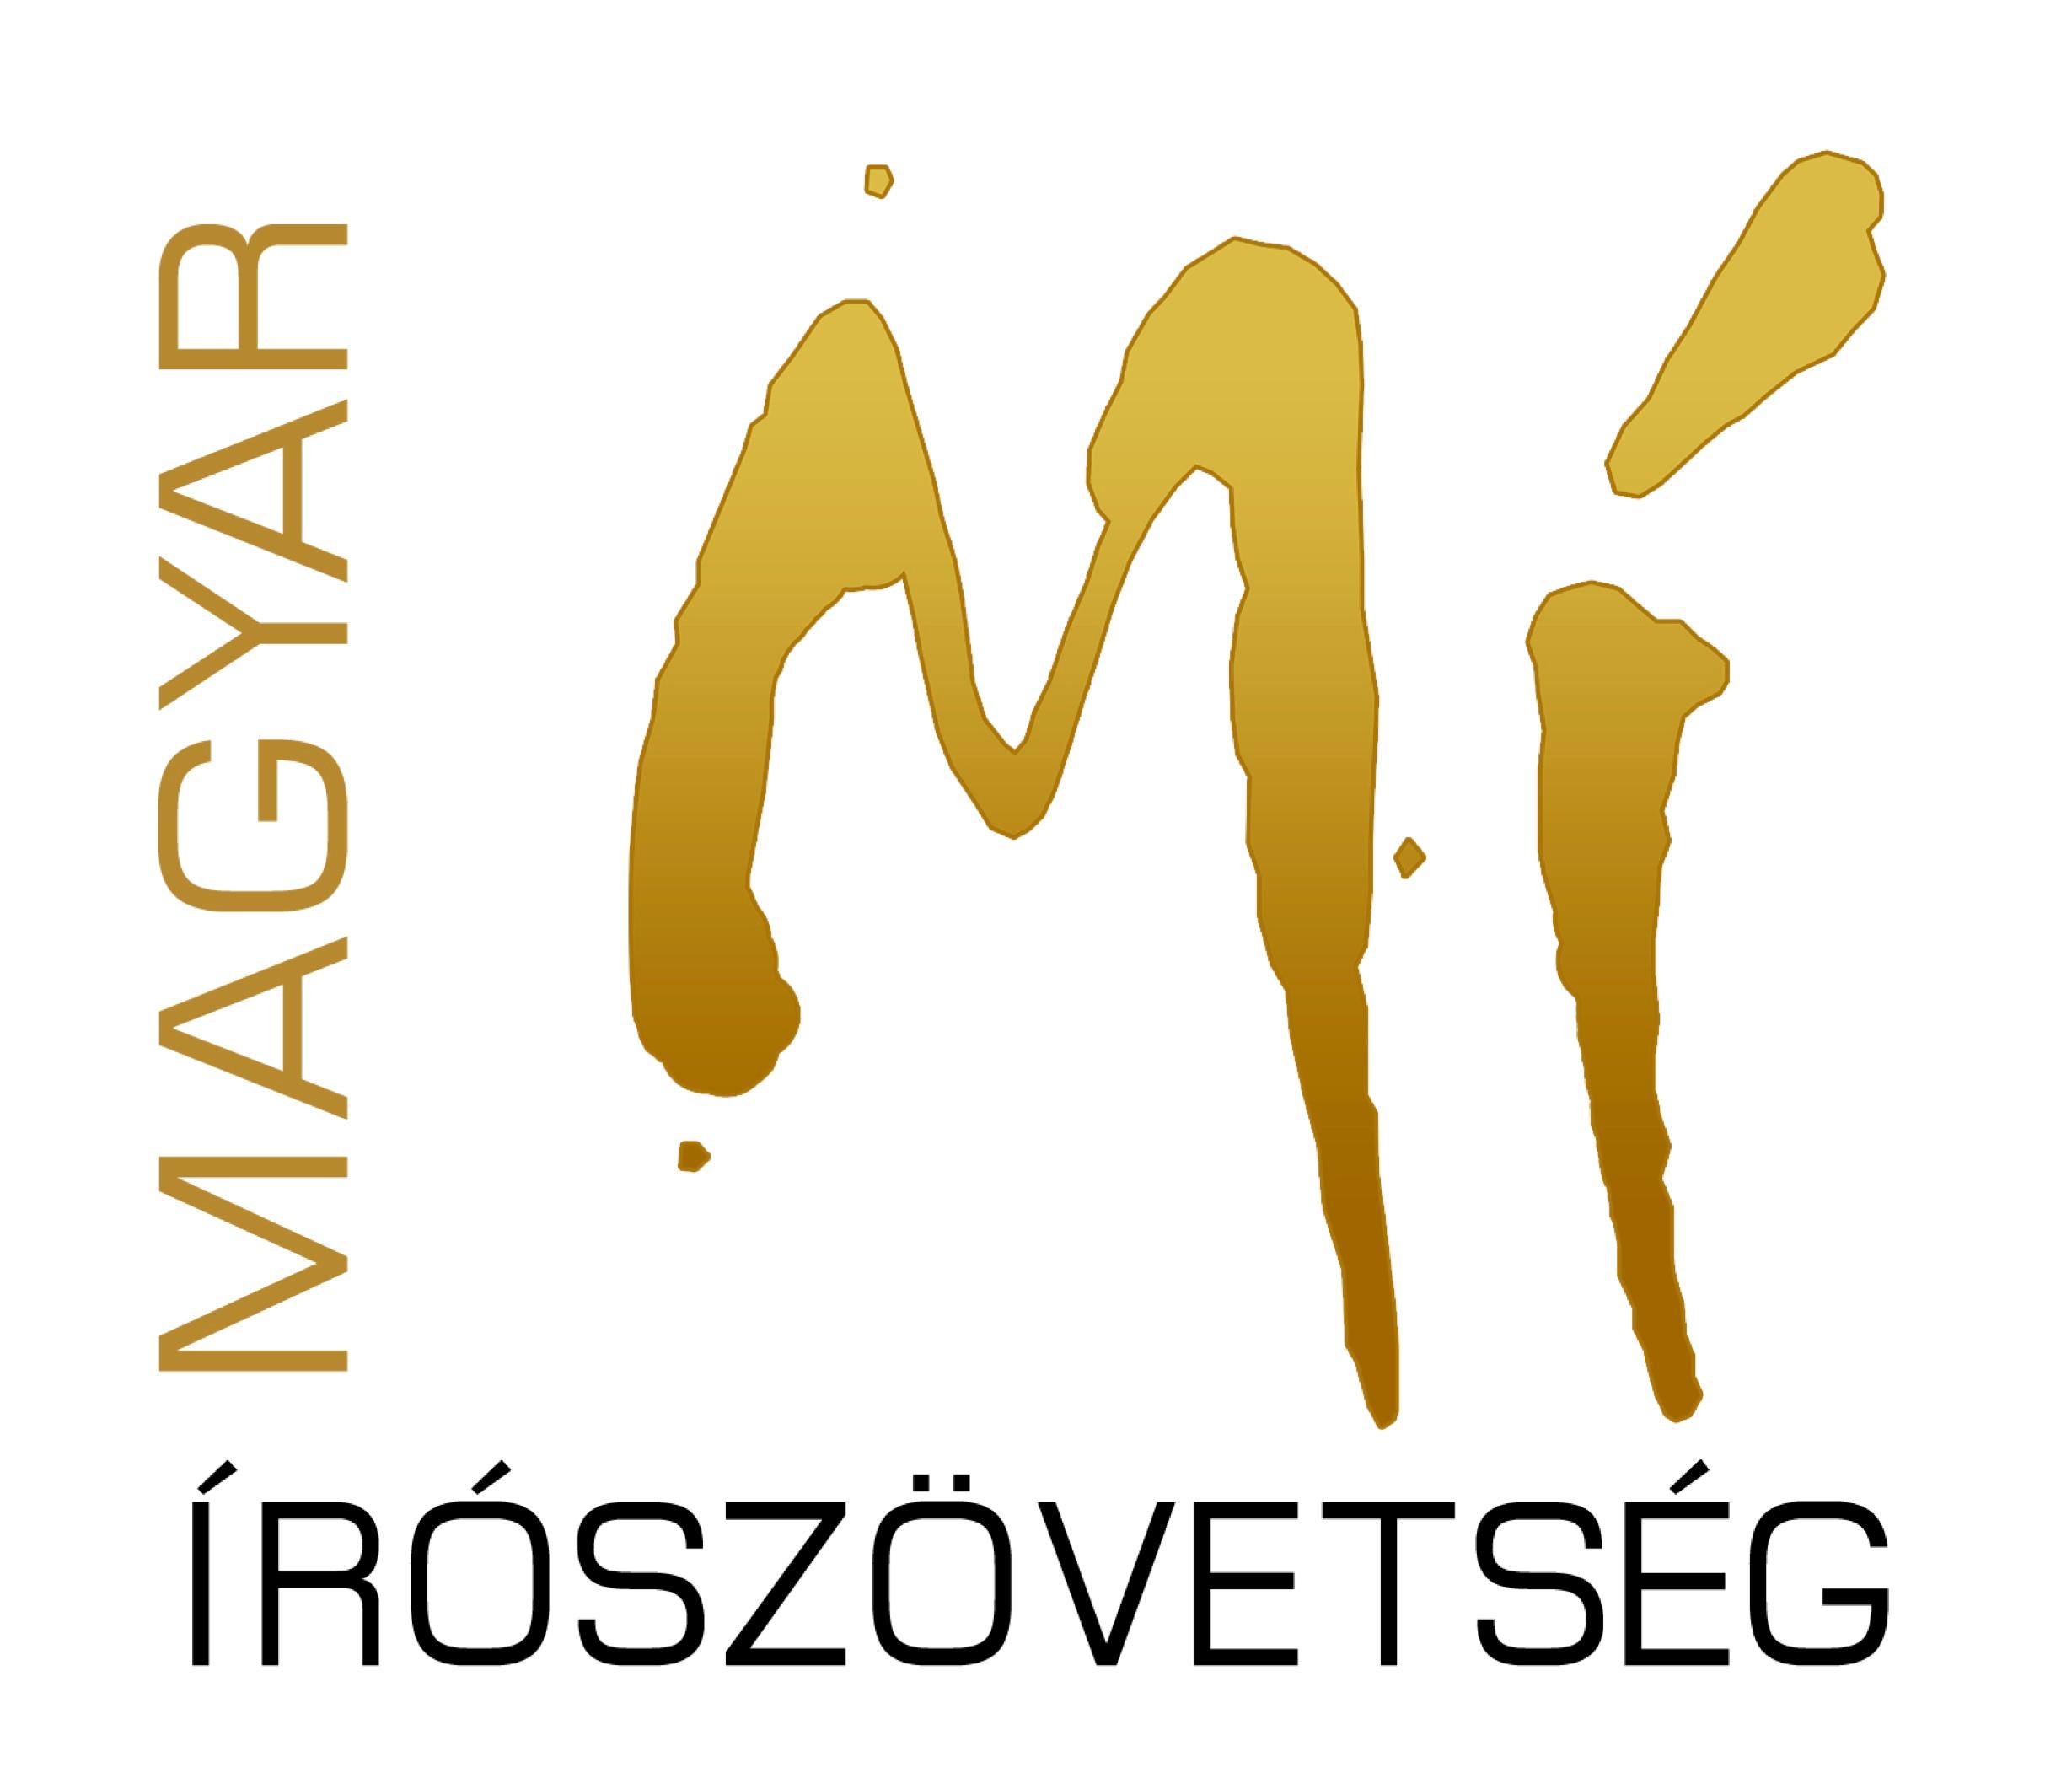 Hungarian Writers’ Union To Mark 1956 Anniversary In 2016